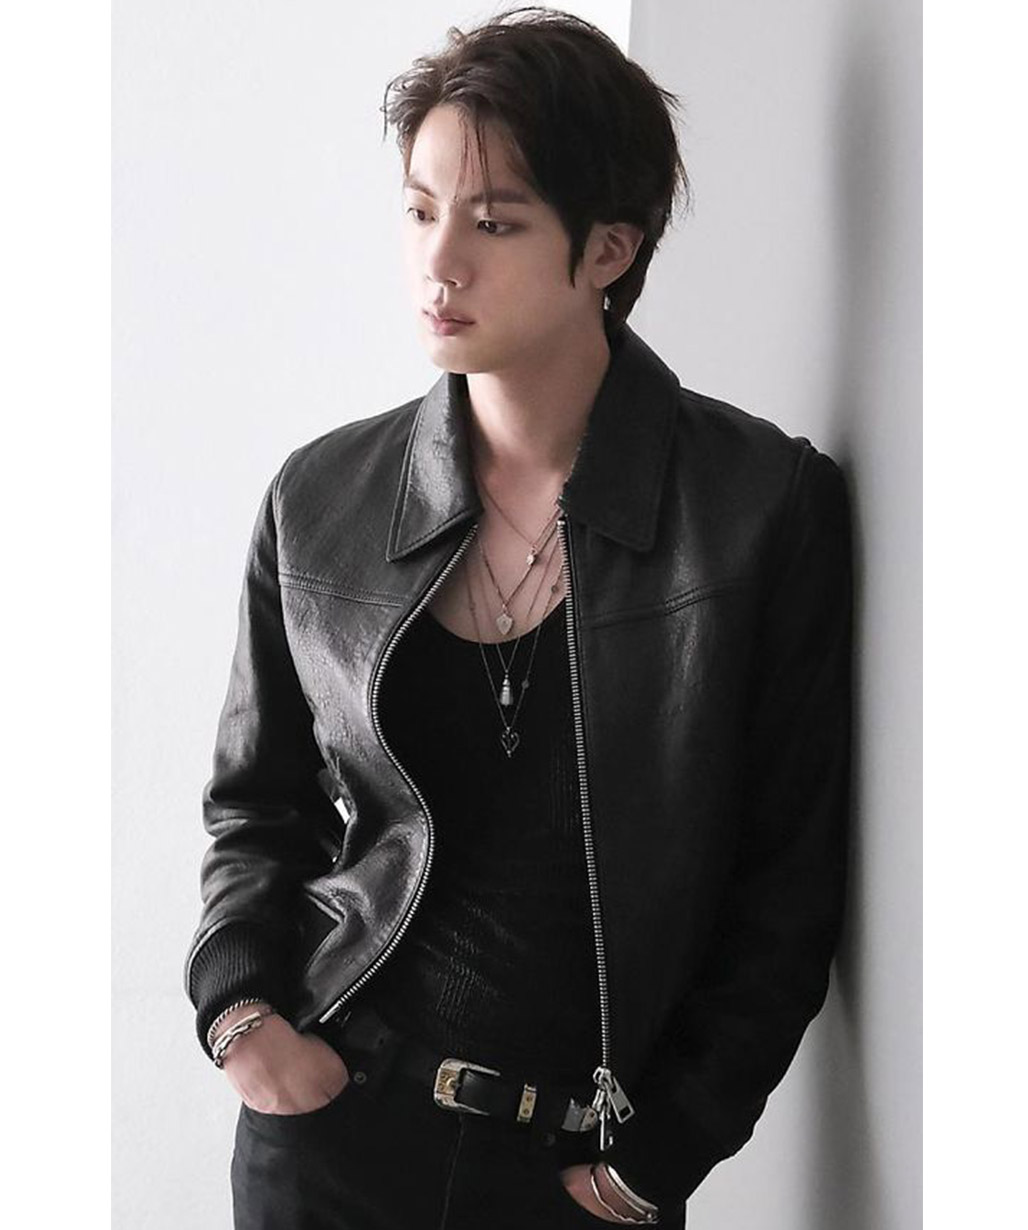 bts-jin-black-leather-jacket-outfit